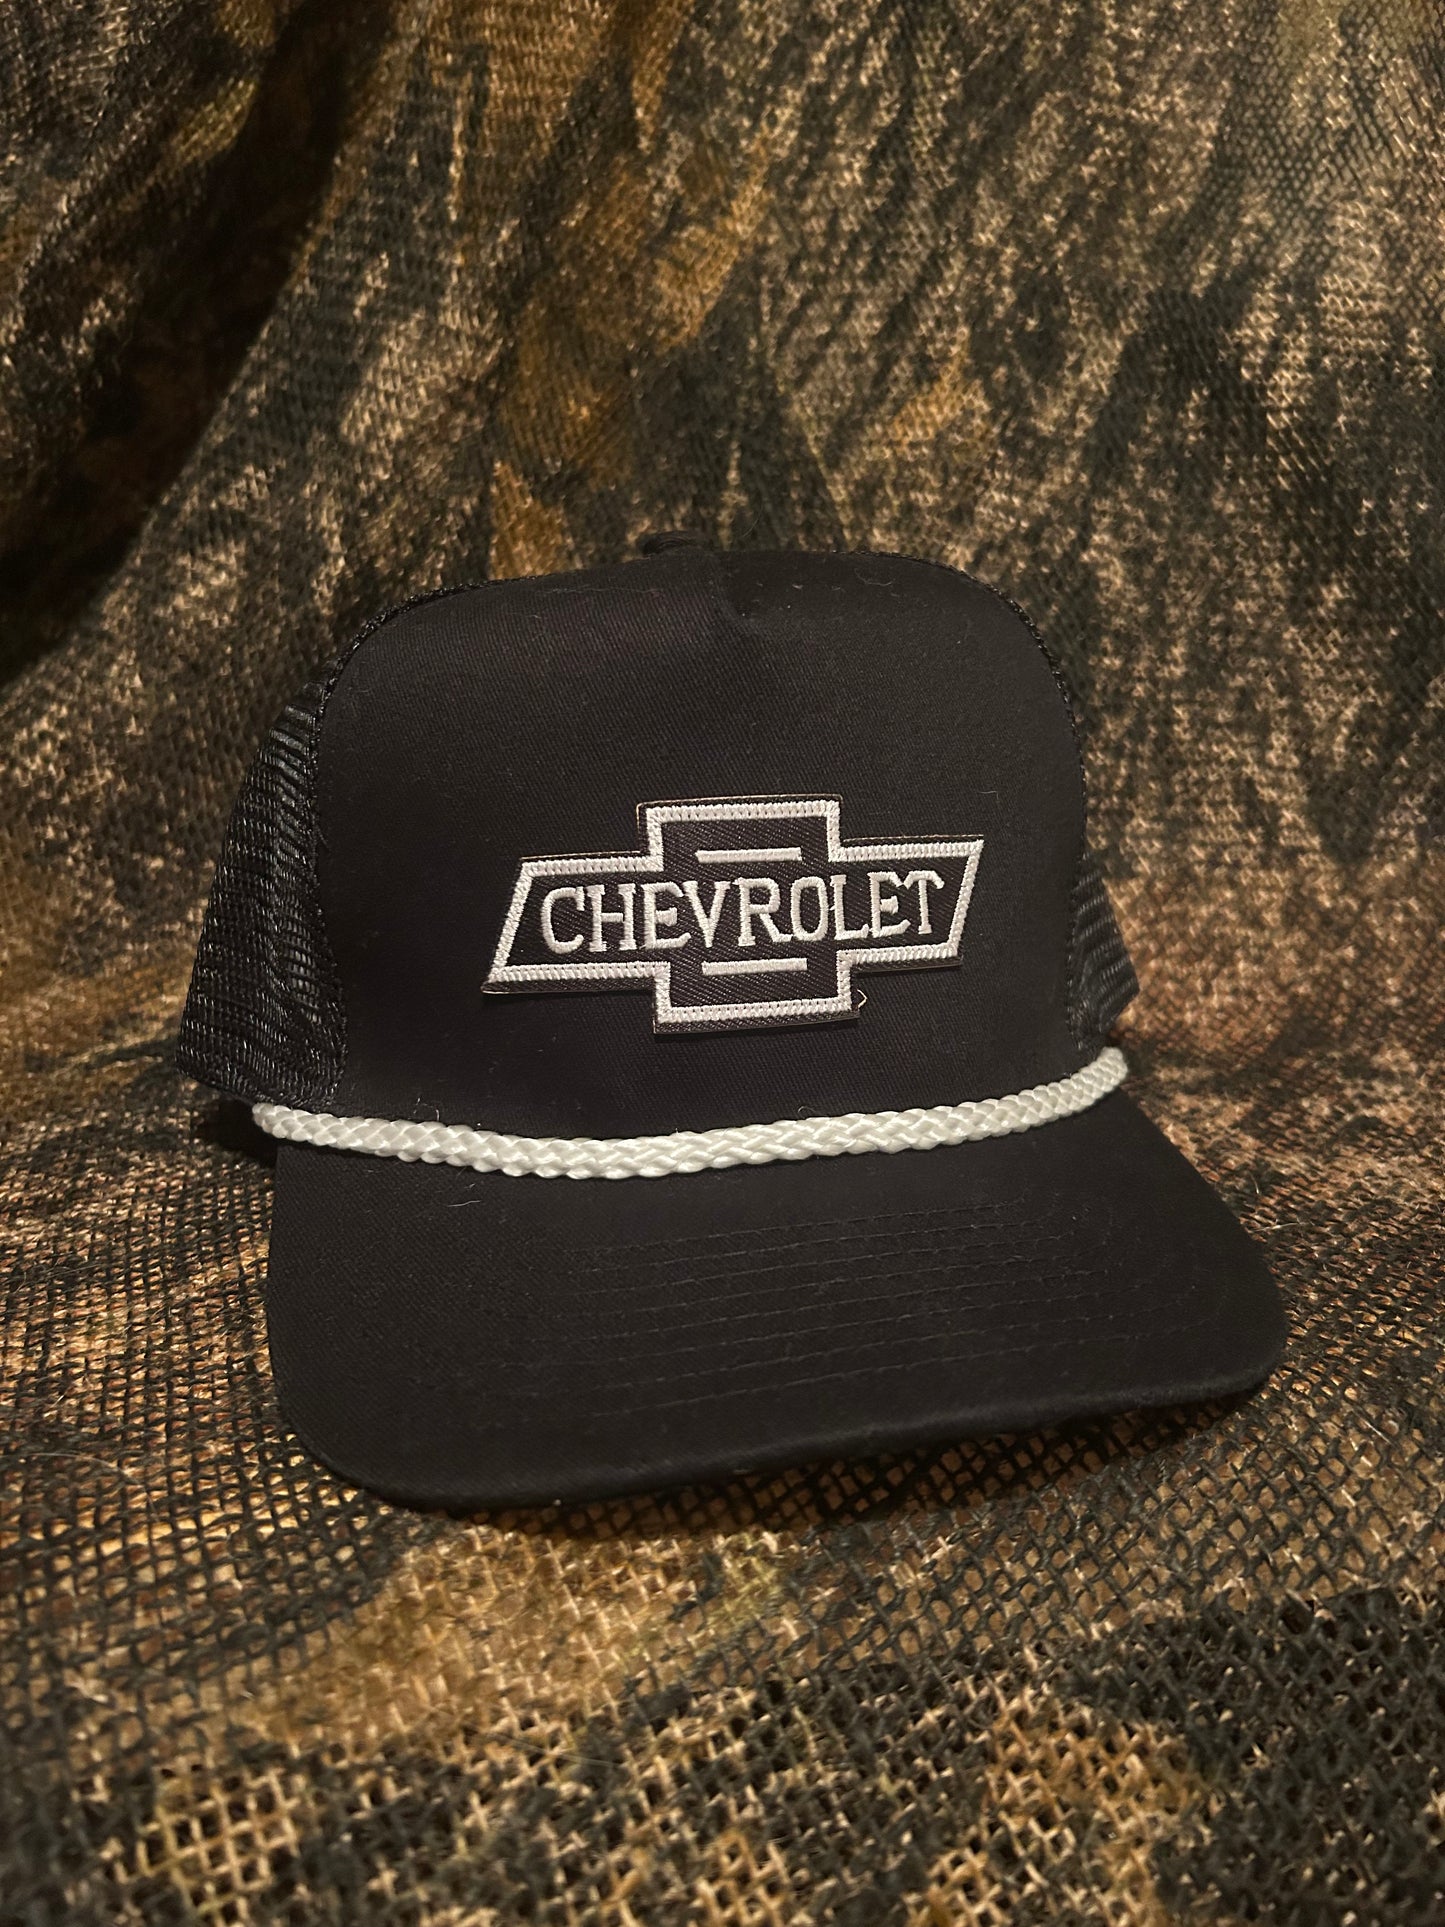 Chevrolet Patch on black/white rope brim snapback hat